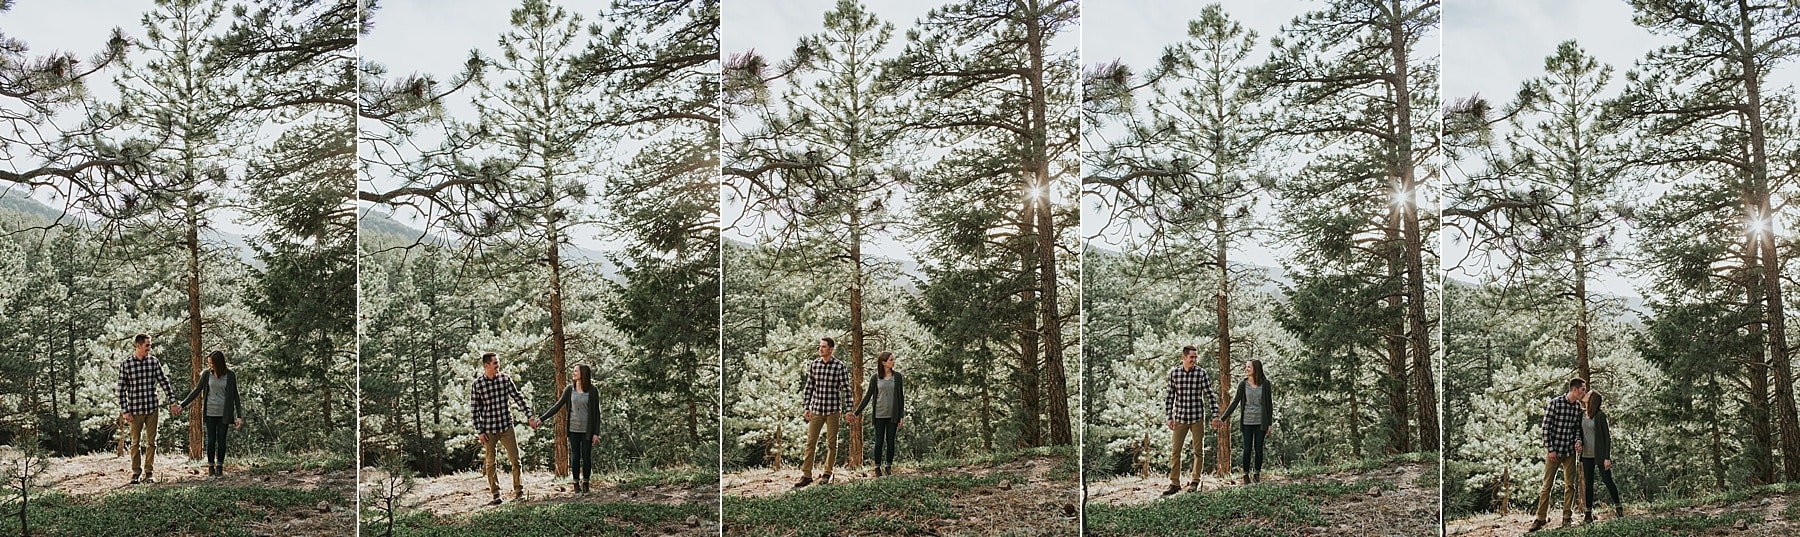 Boulder engagement photography